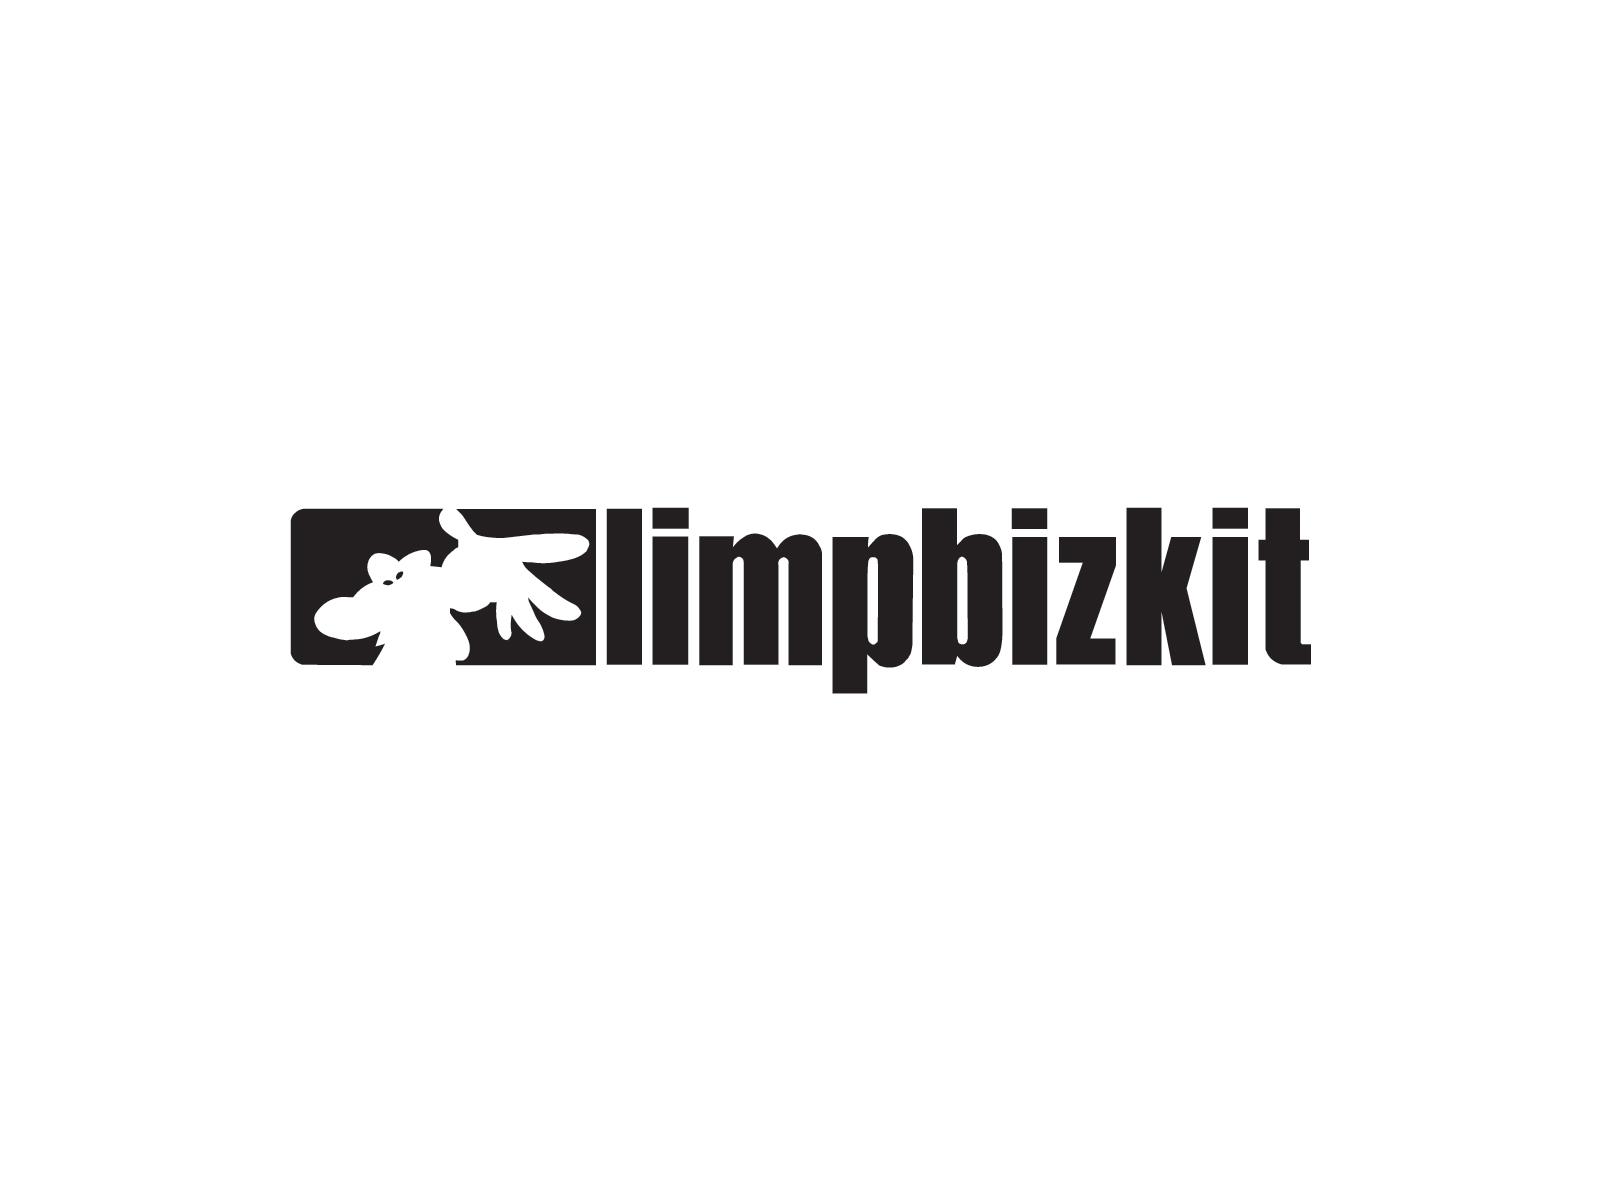 Limp Bizkit at 1600 x 1200 size wallpapers HD quality